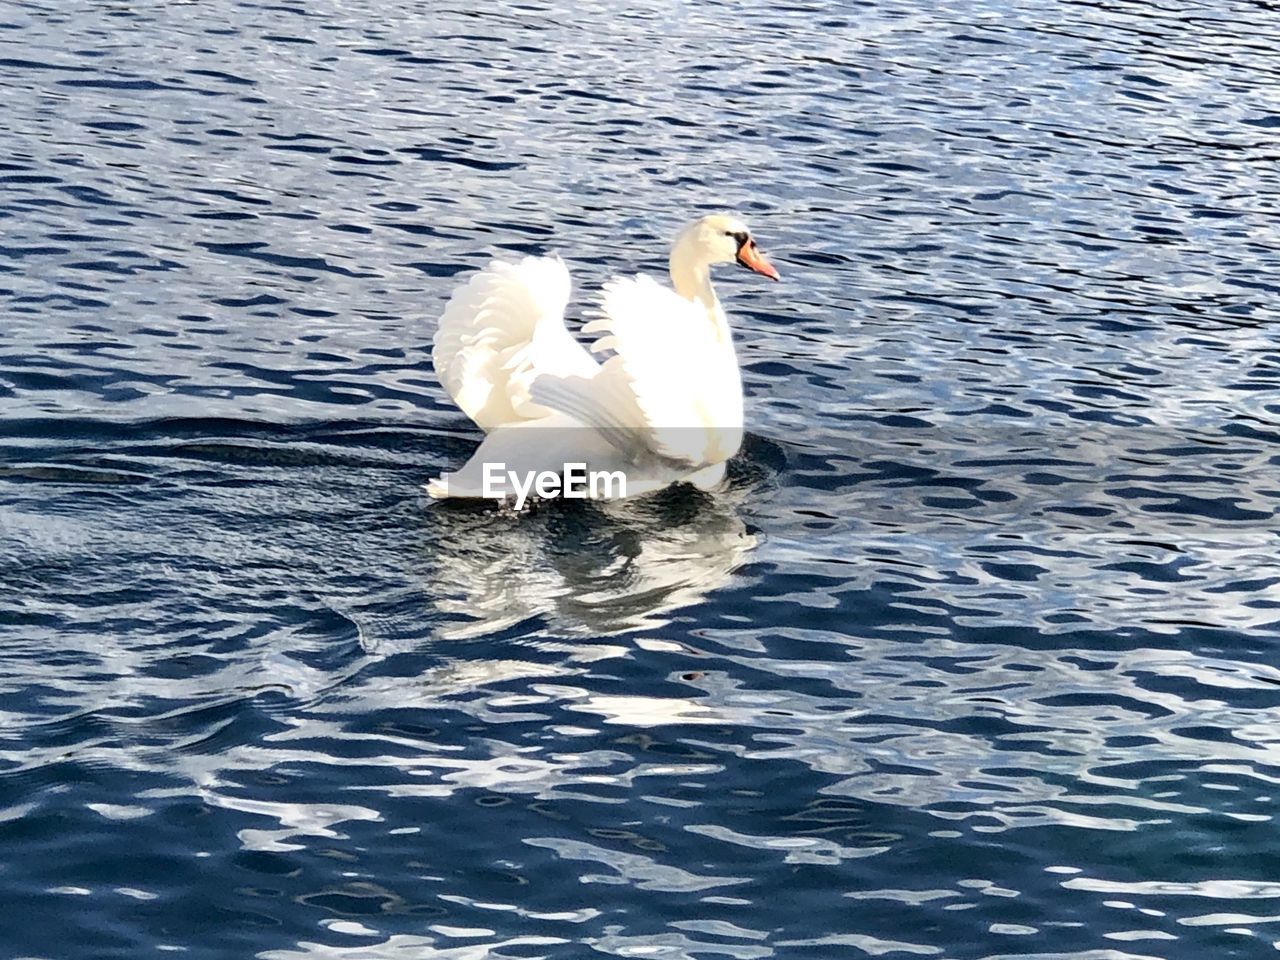 SWAN IN A LAKE